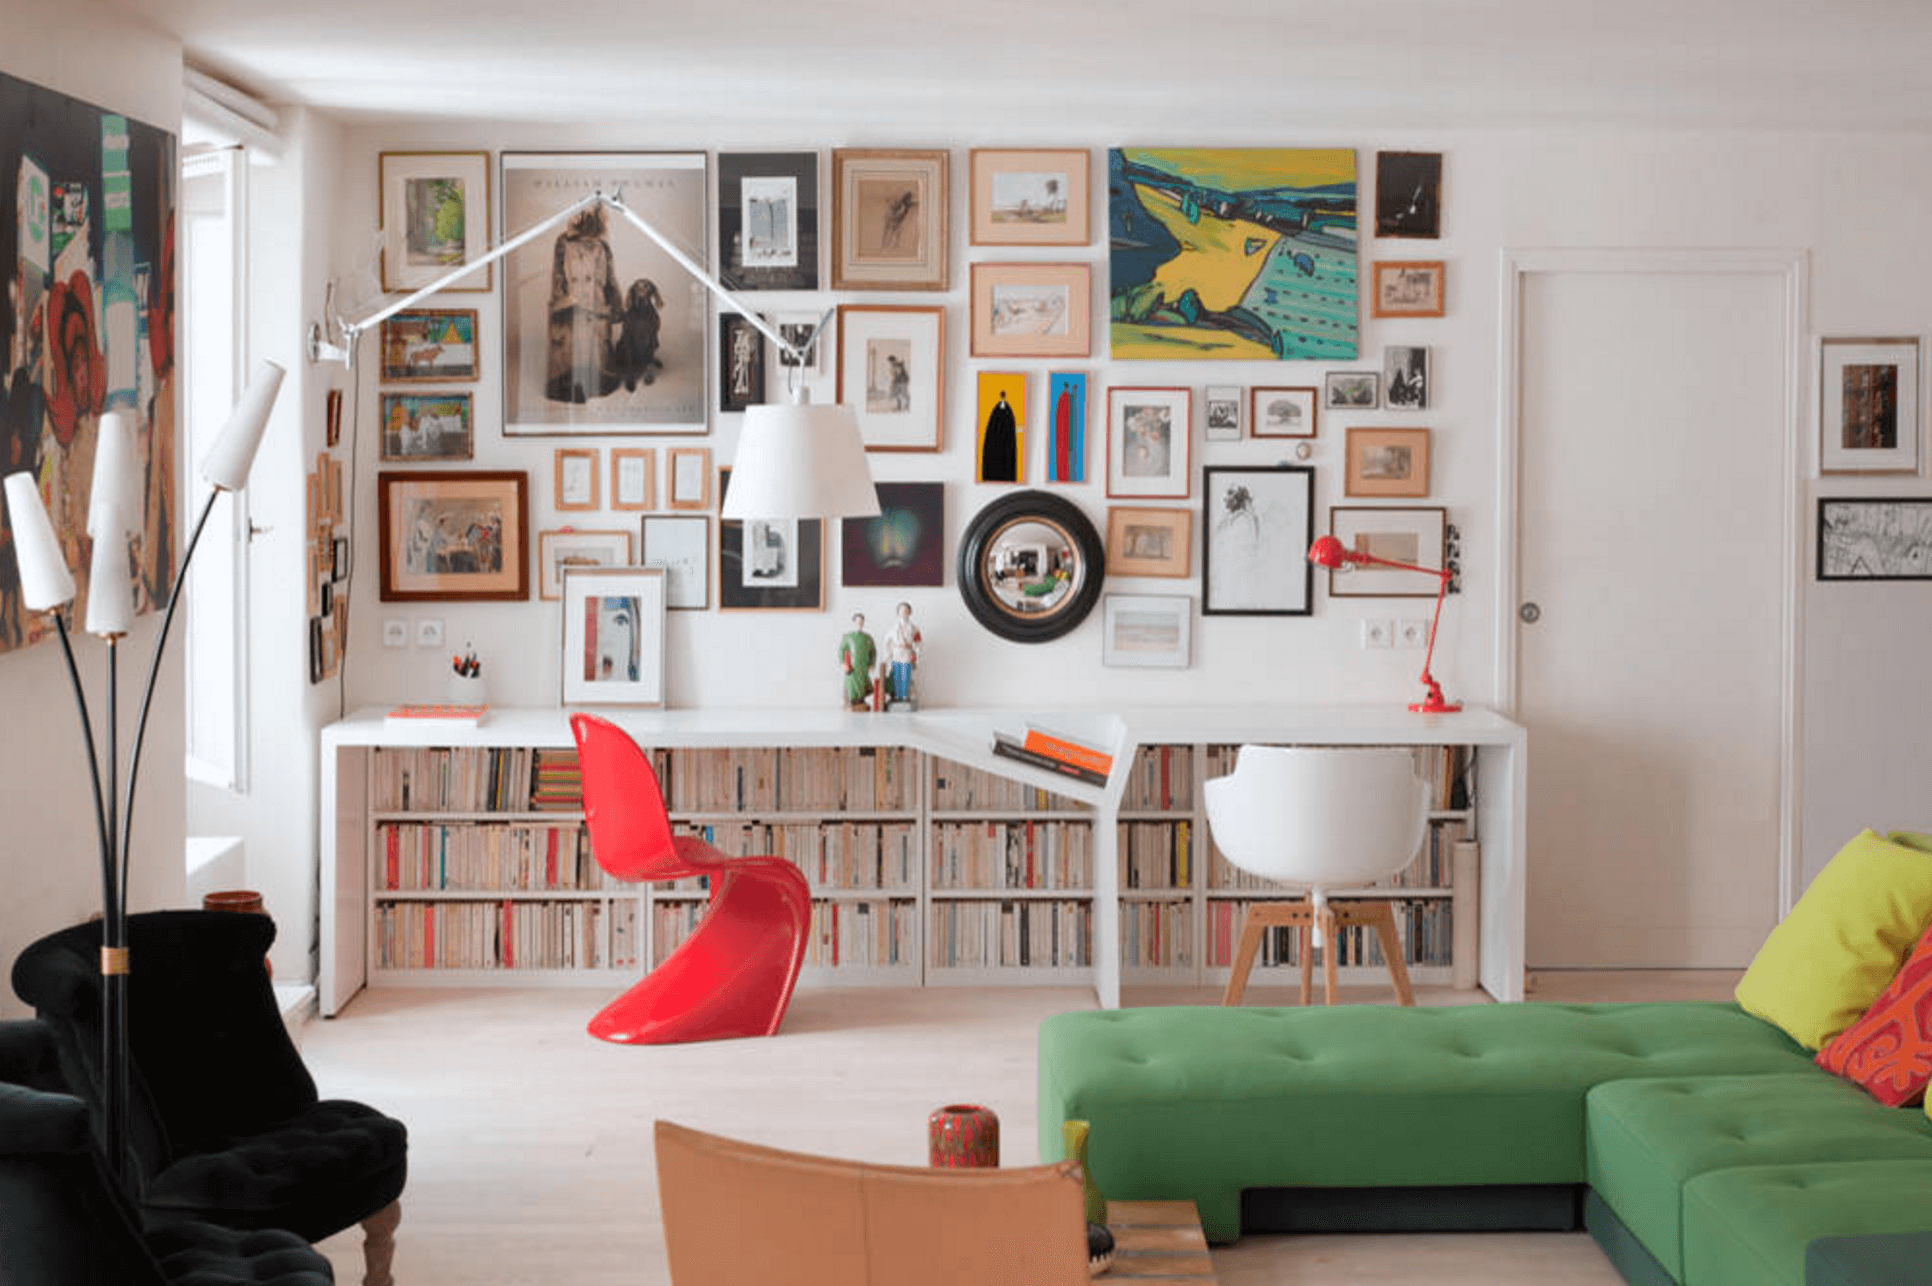 4 Modern Ideas For Your Home Office Décor